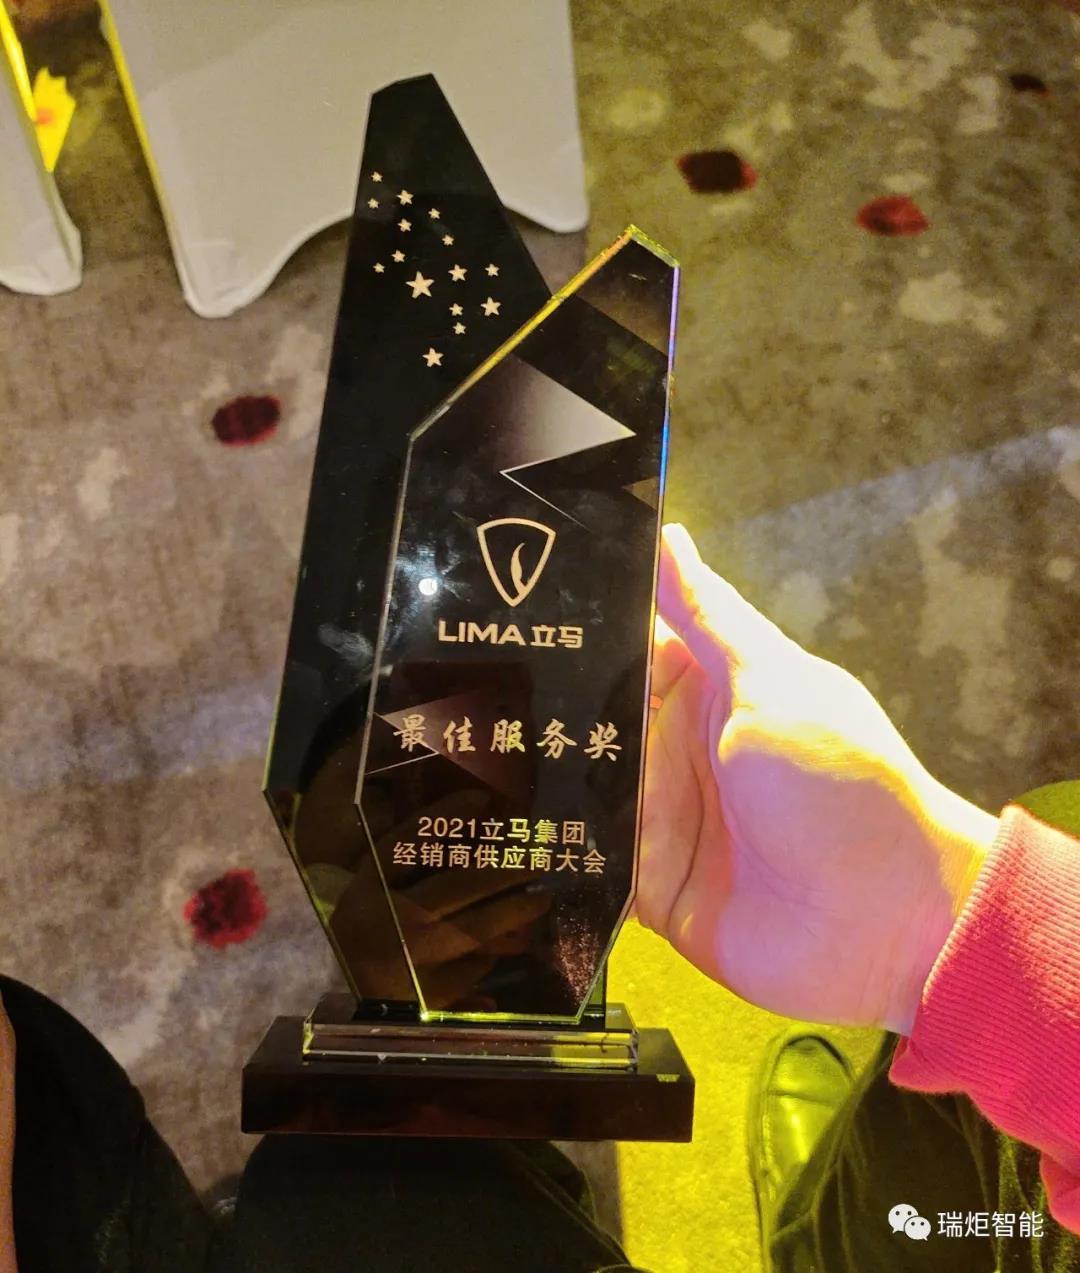  Blector won Lima Best Service Award